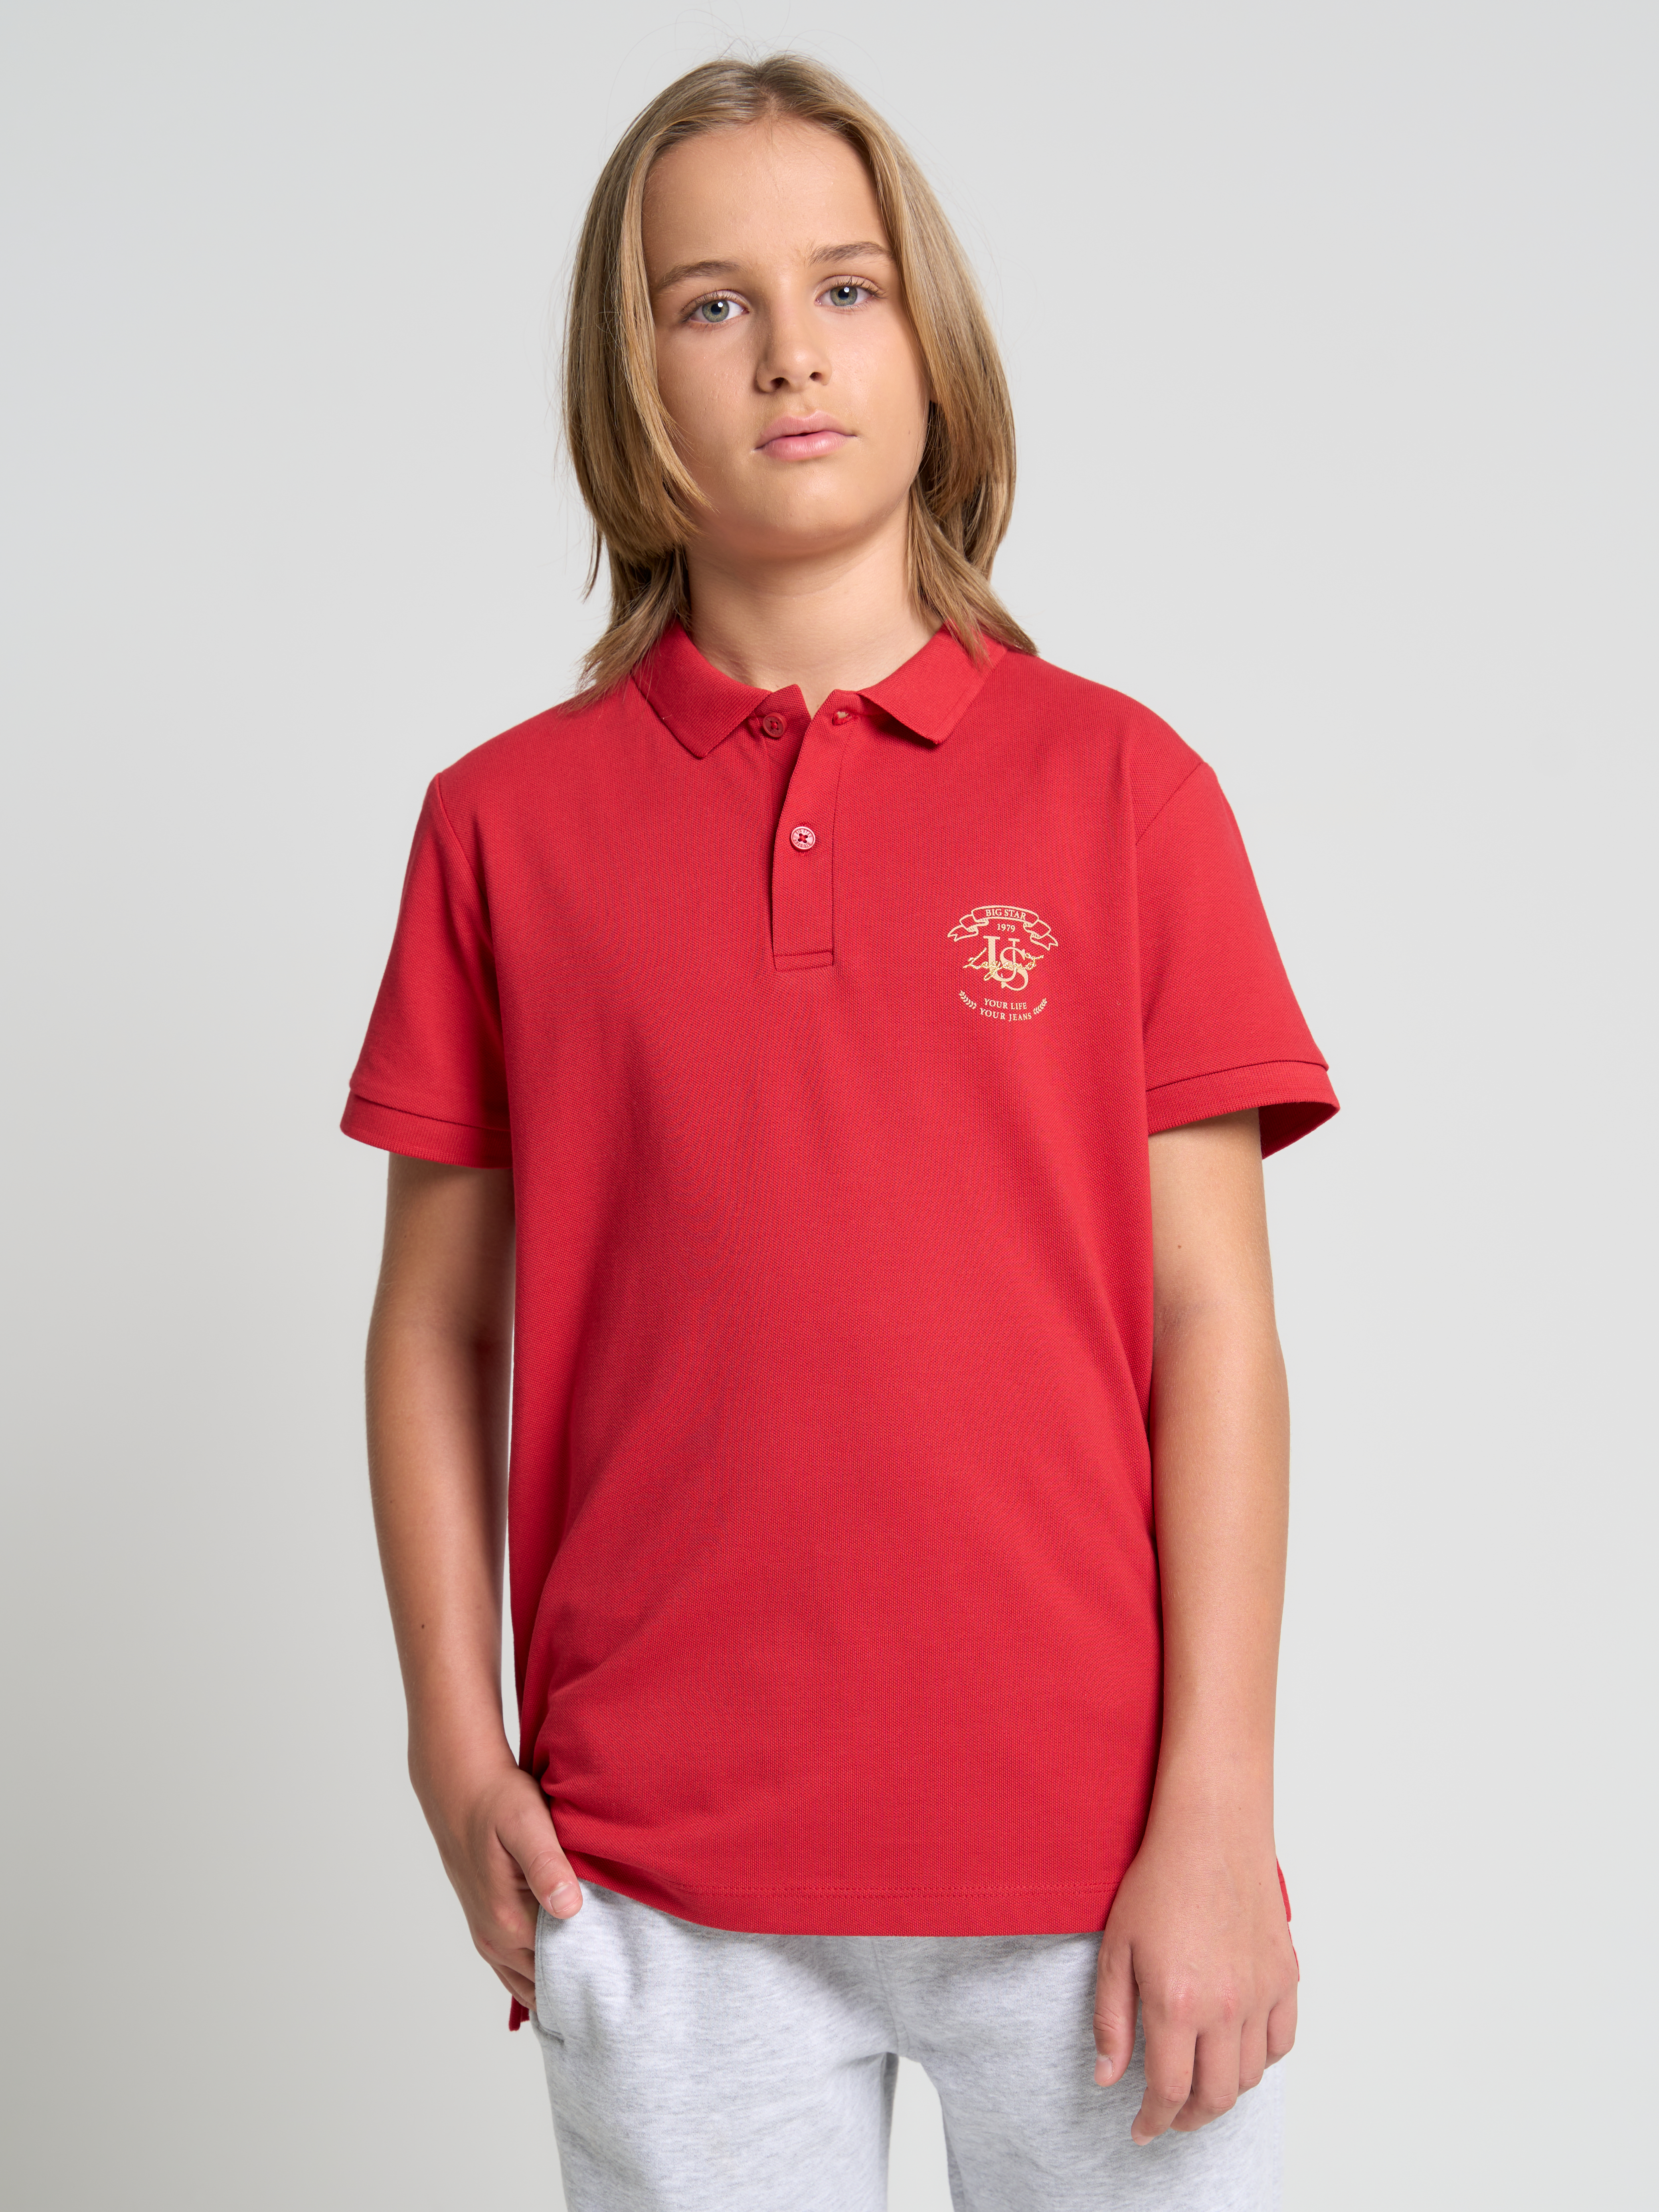 Big Star Kids's Polo T-shirt 152258